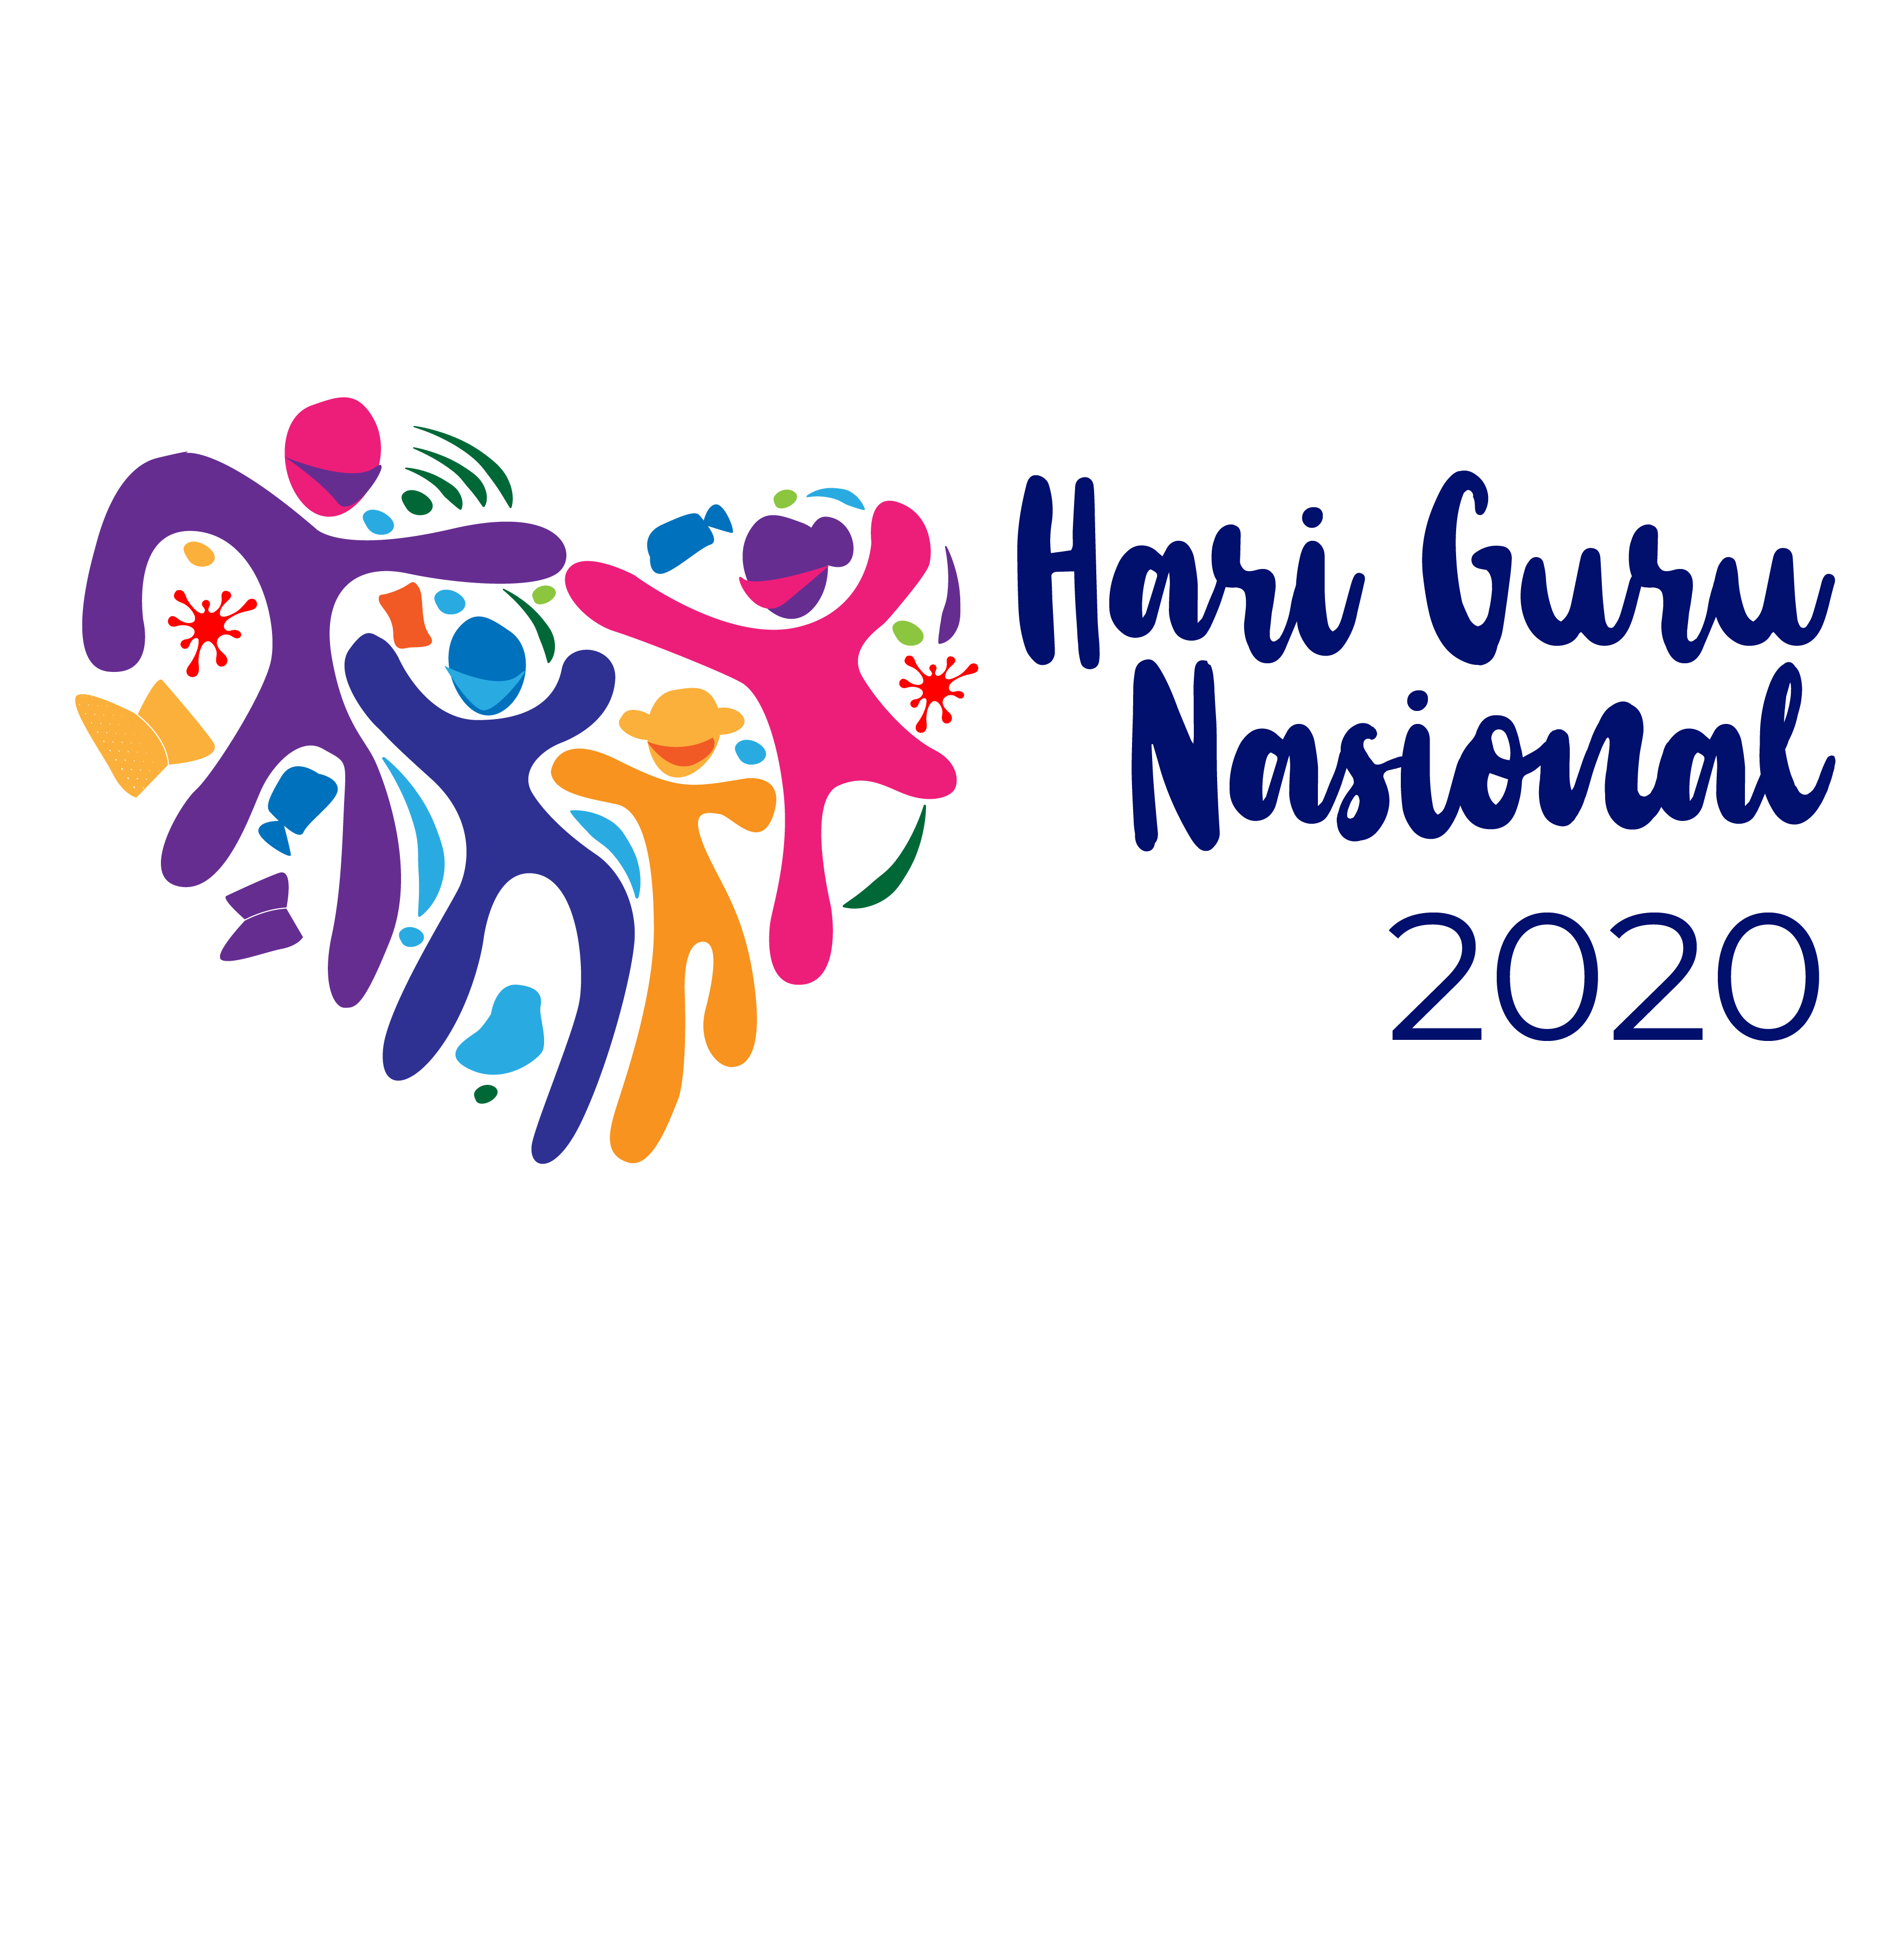 Logo hari guru nasional 2020 (Sumber: Kemdikbud.go.id)